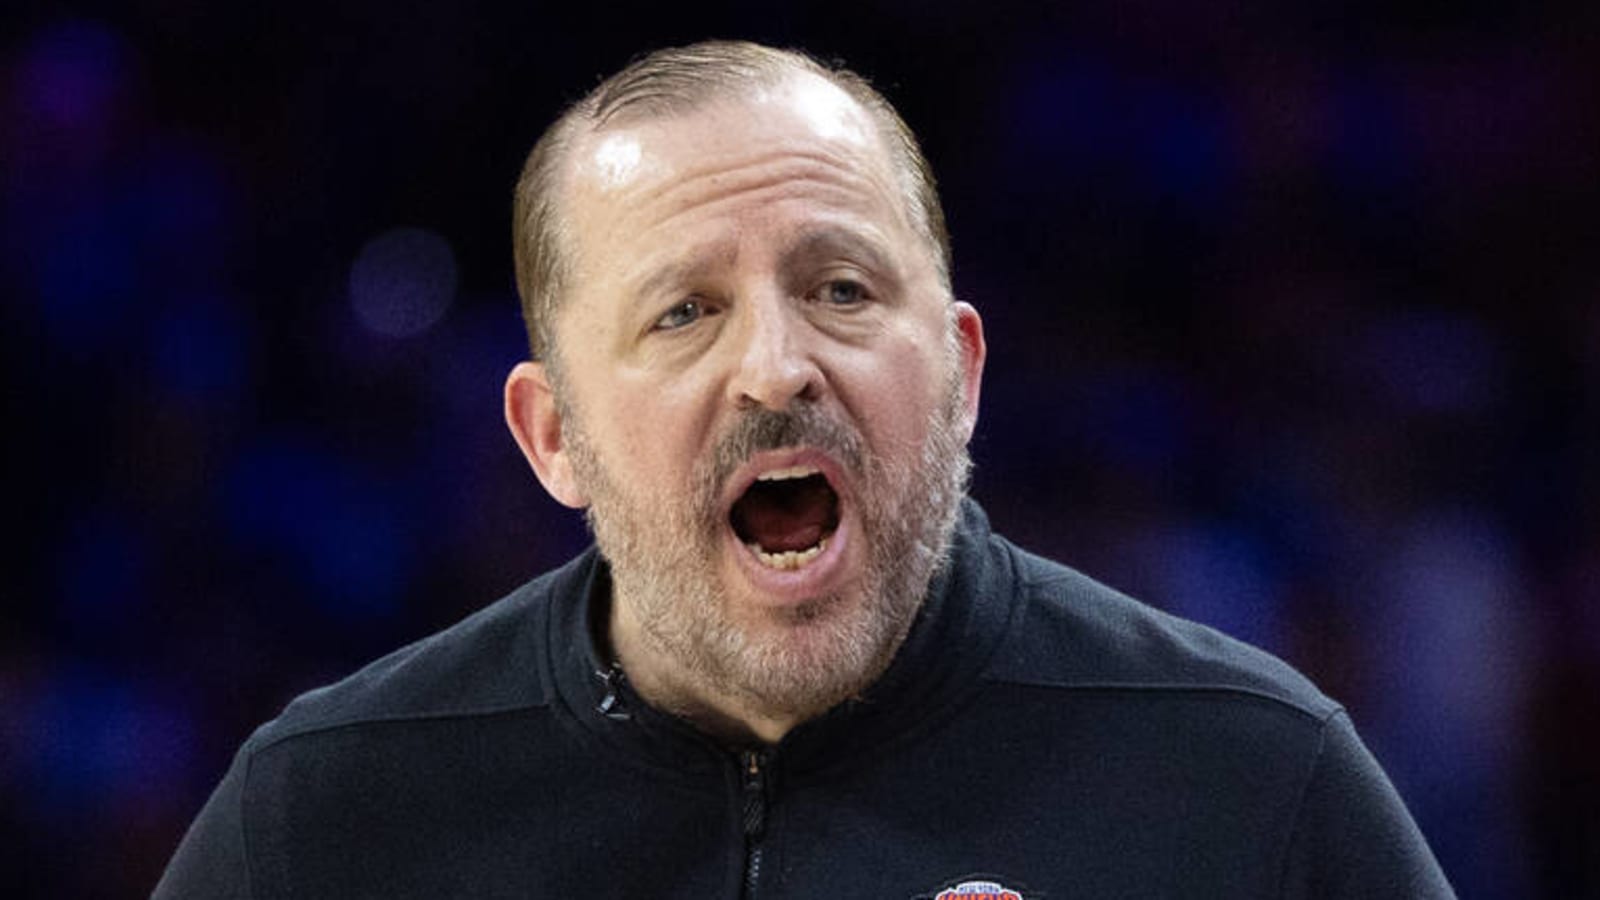 Despite great season, Knicks need to make change at top